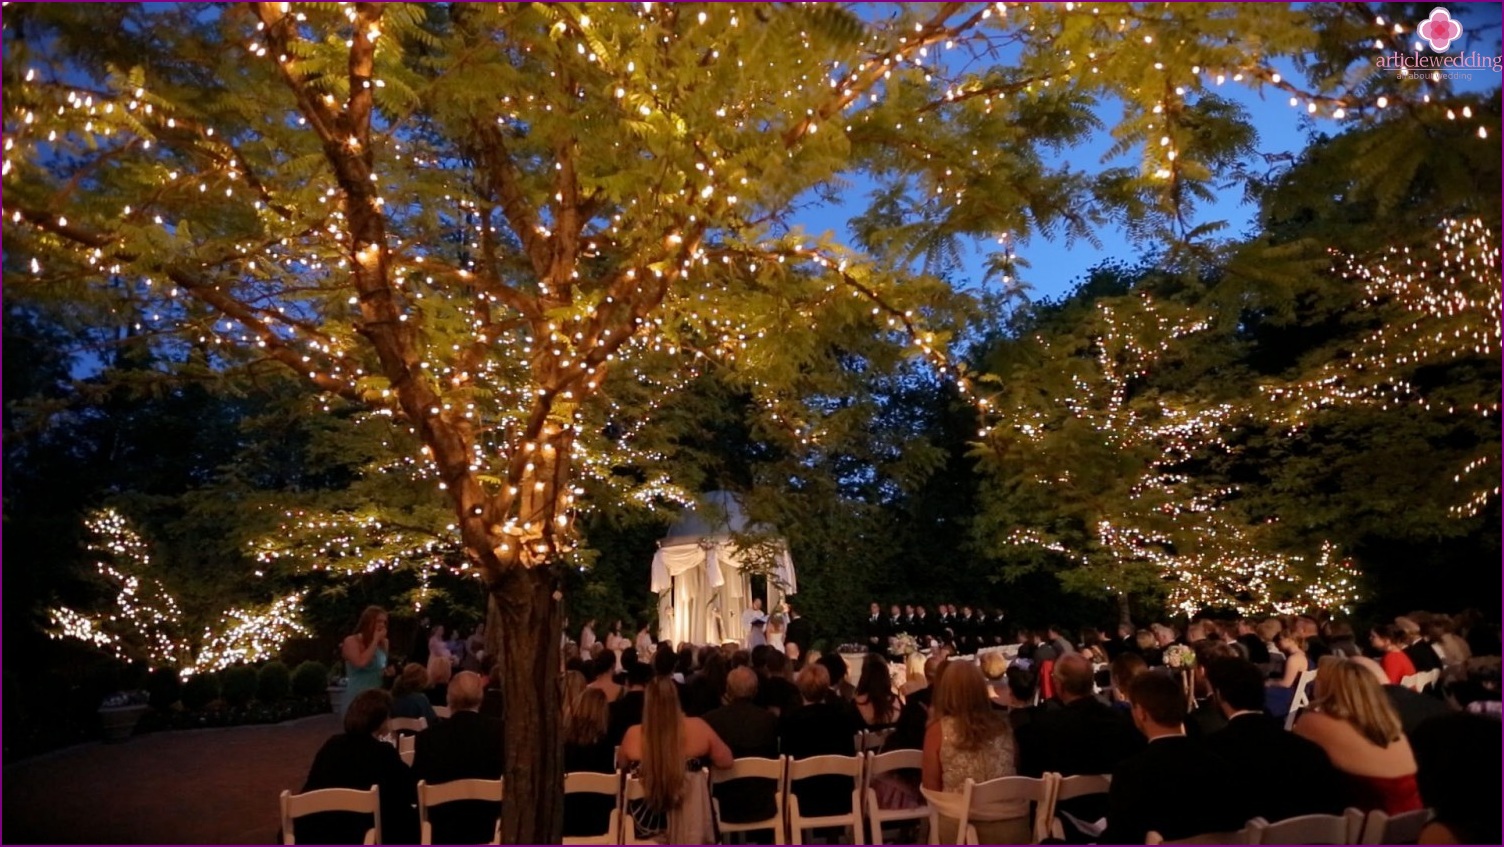 Illumination of trees as lighting at a wedding